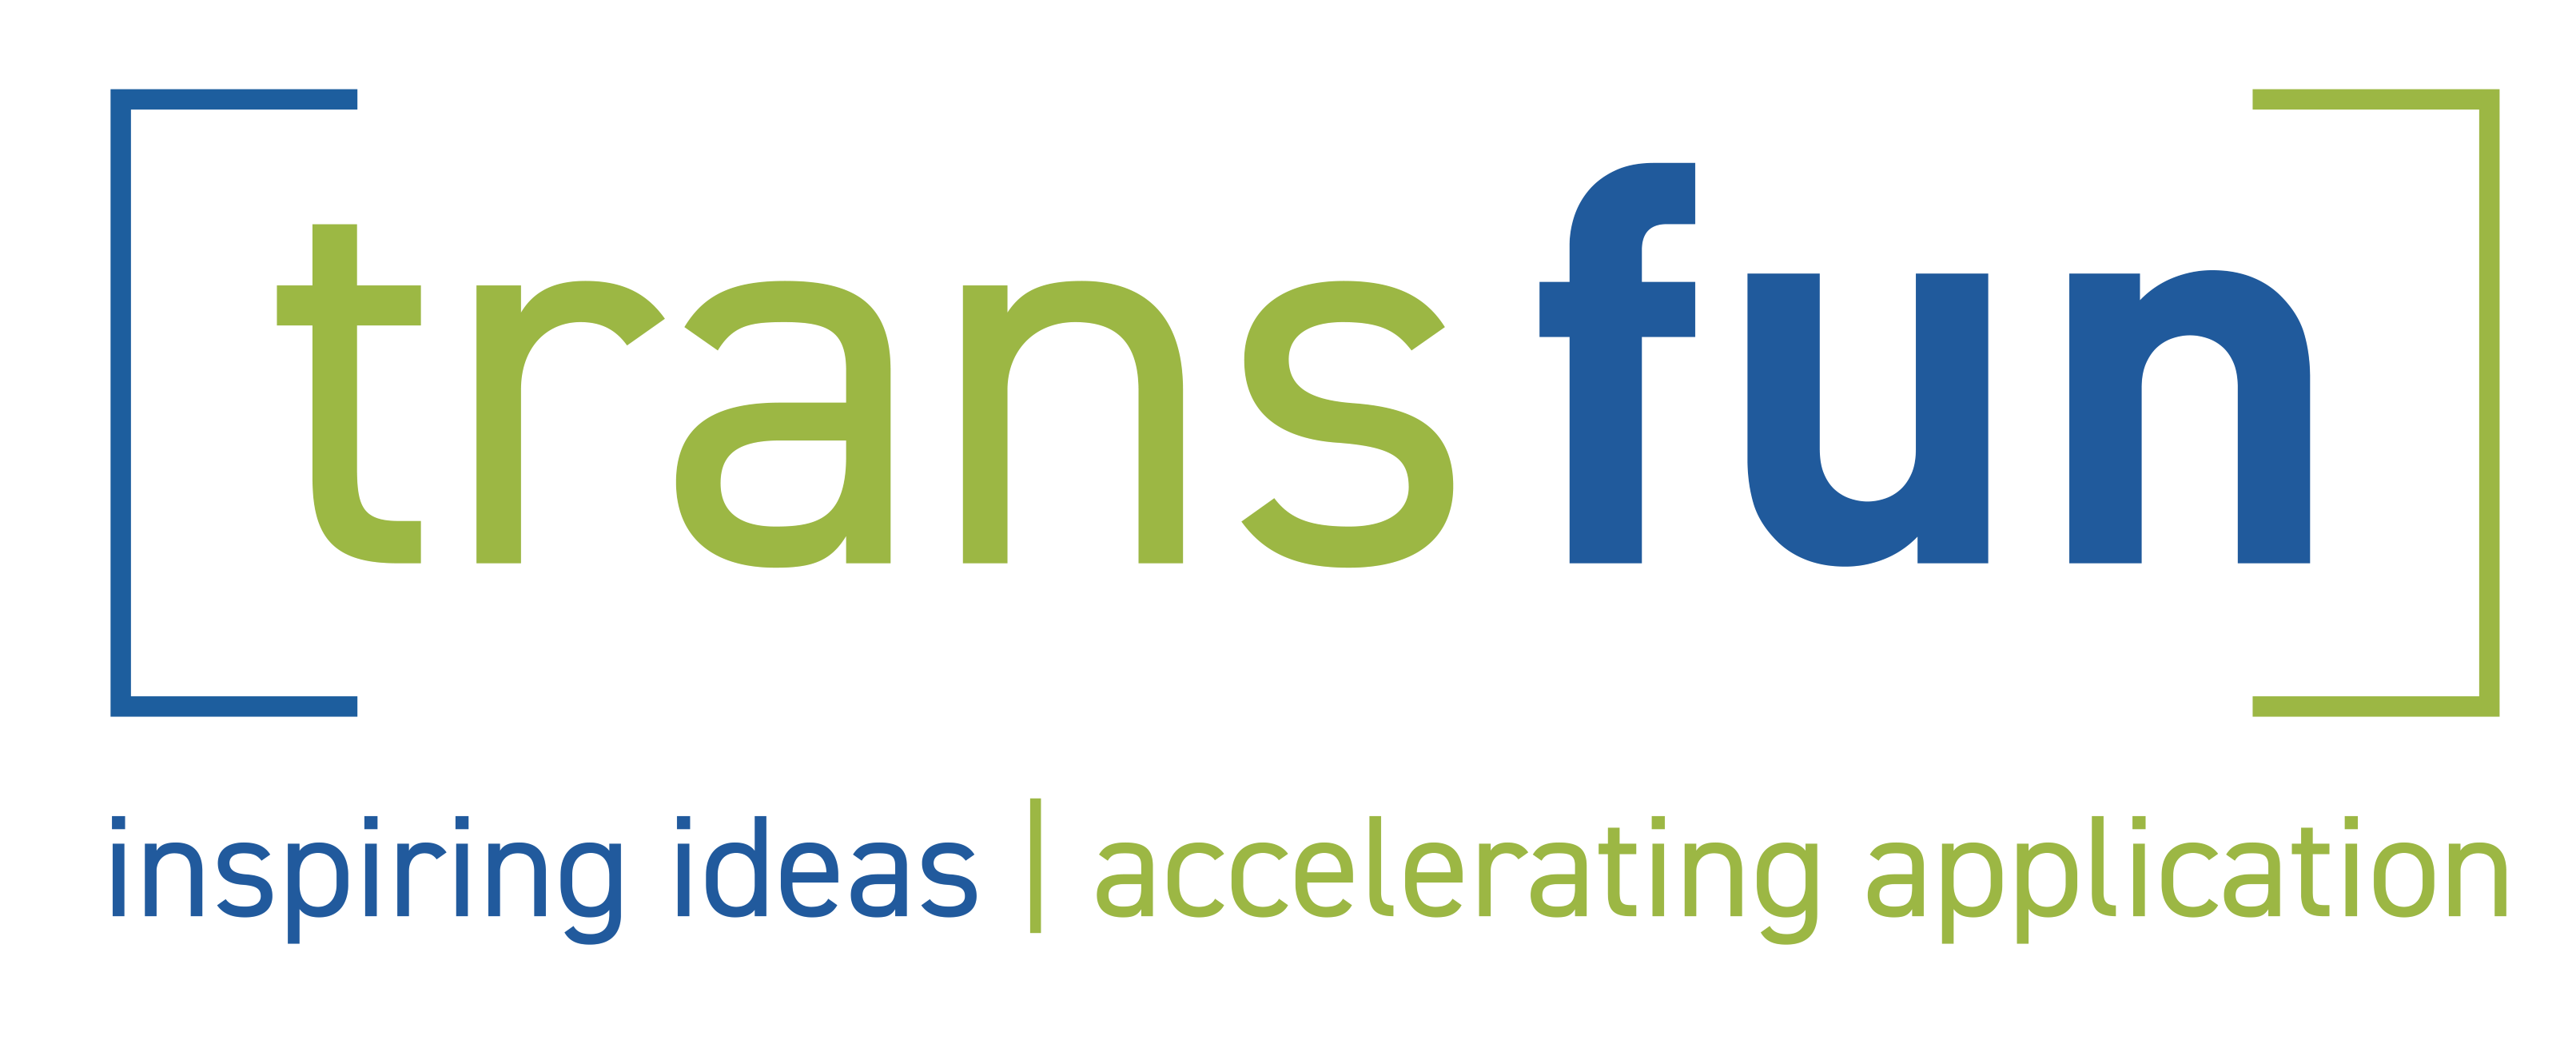 Logo transfun